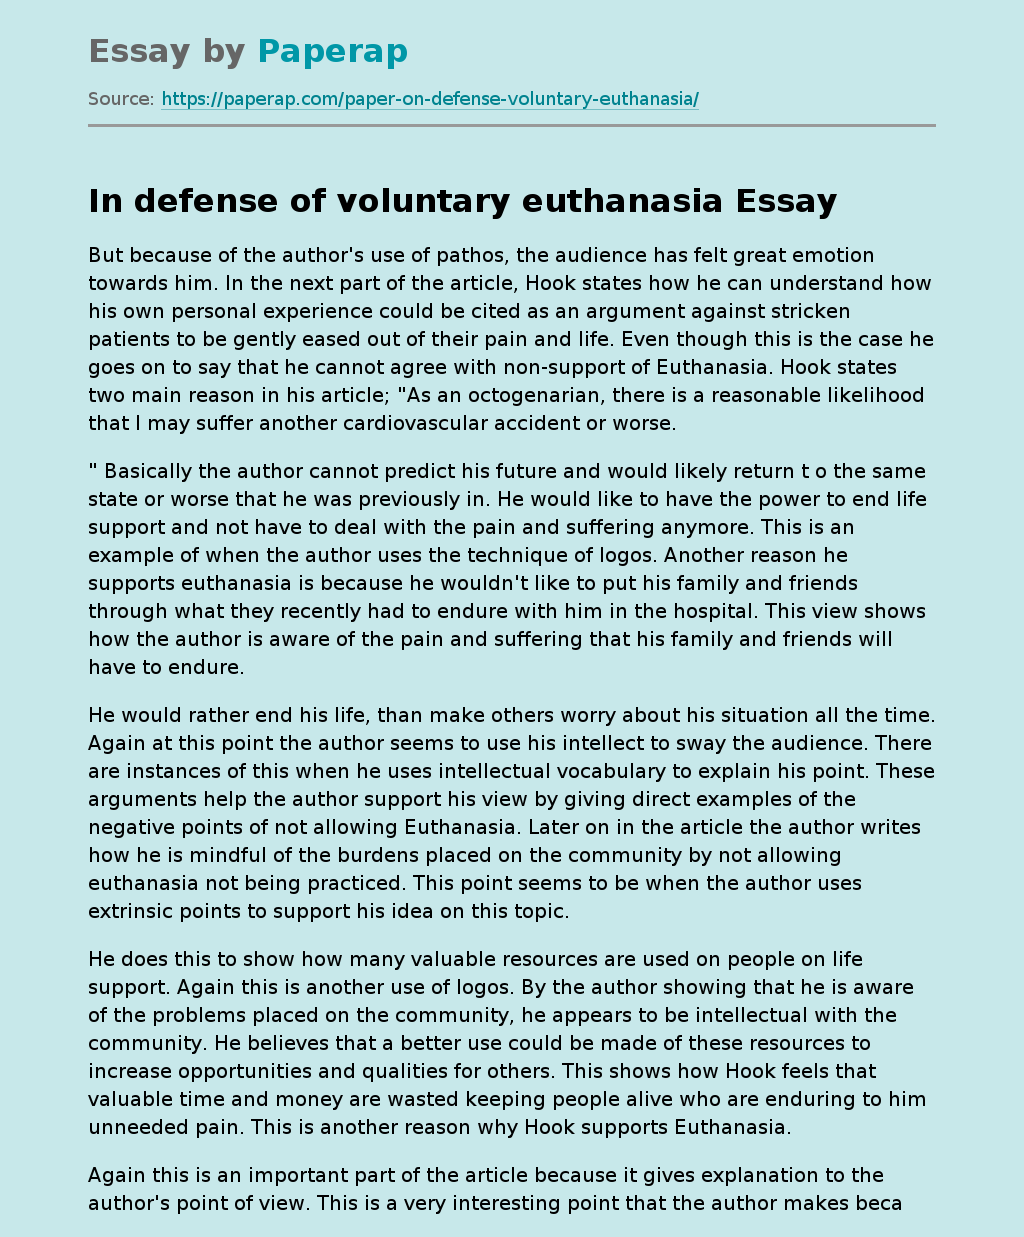 In defense of voluntary euthanasia